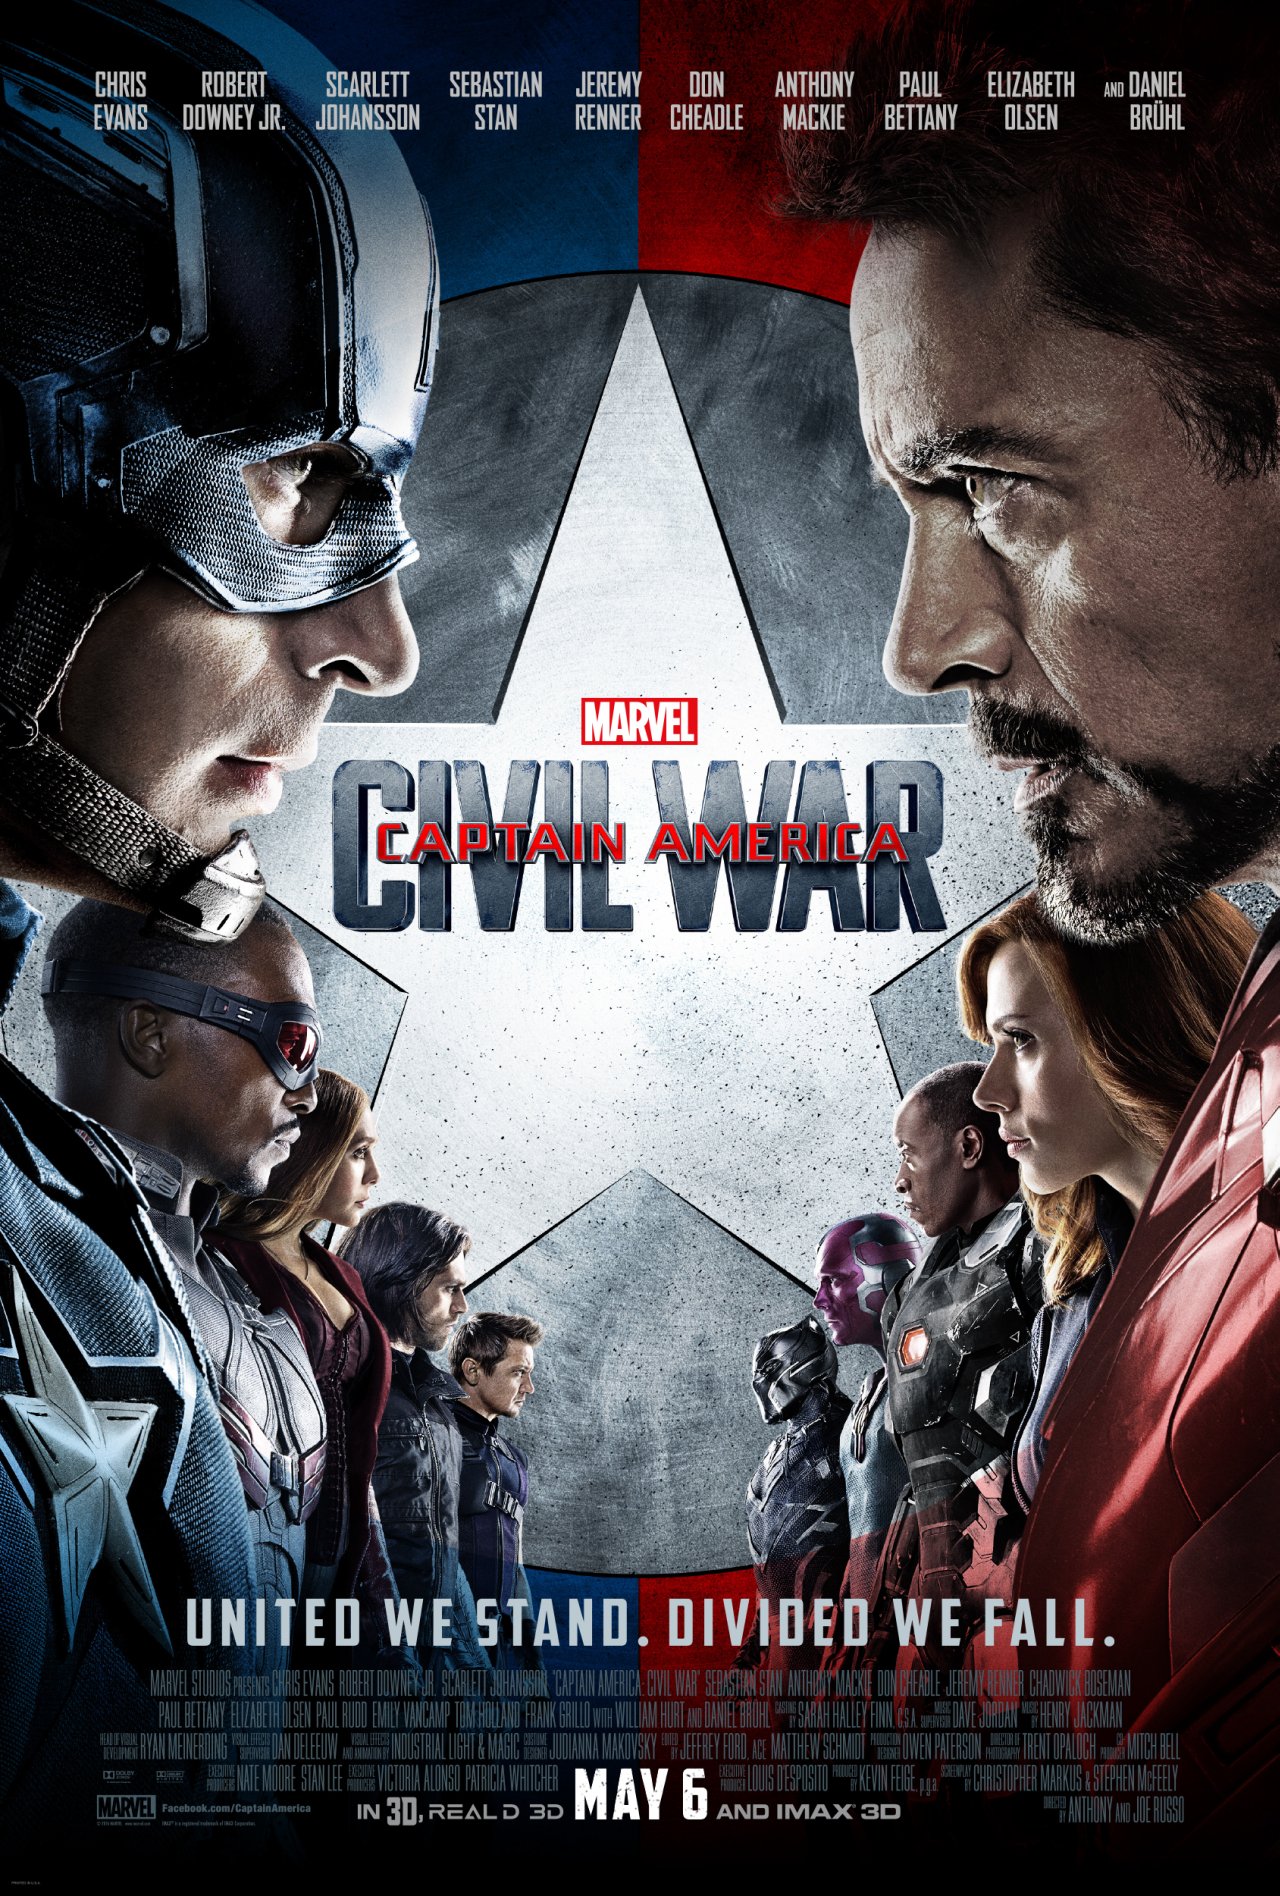 Marvel Releases A Sneak Peek Of Bonus Features From “Captain America: Civil War” Blu-Ray